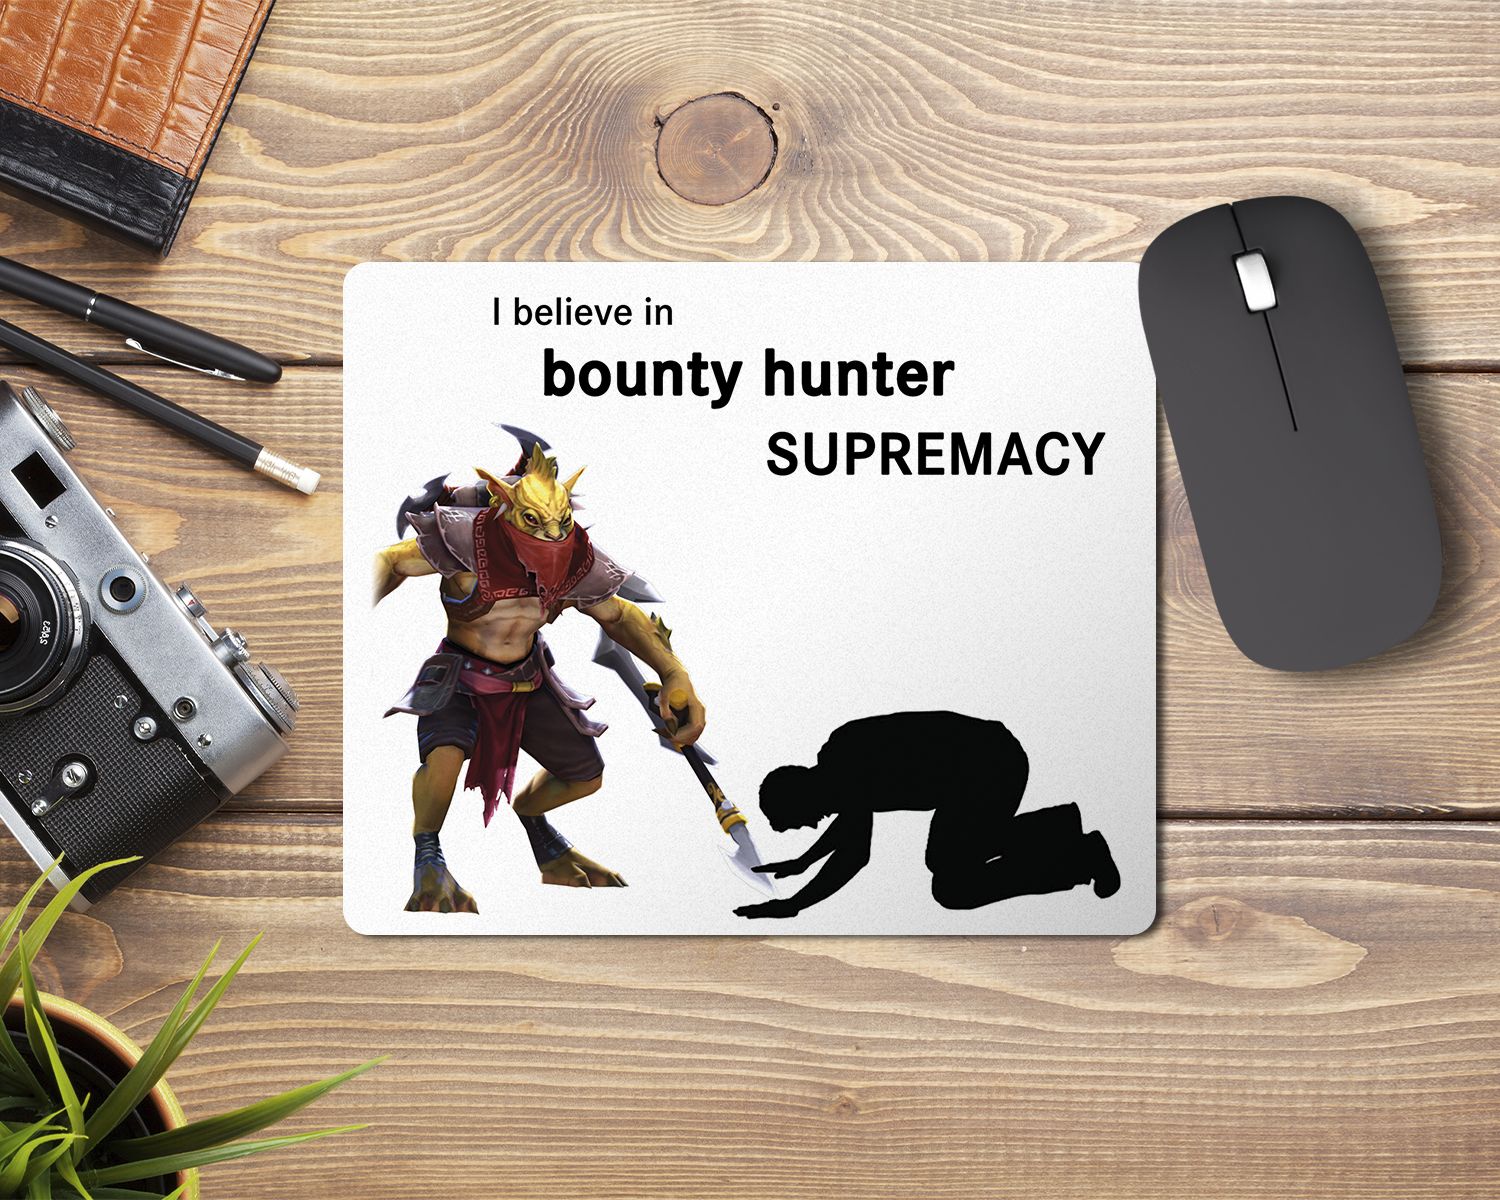 Bounty hunter dota 2 позиция фото 55